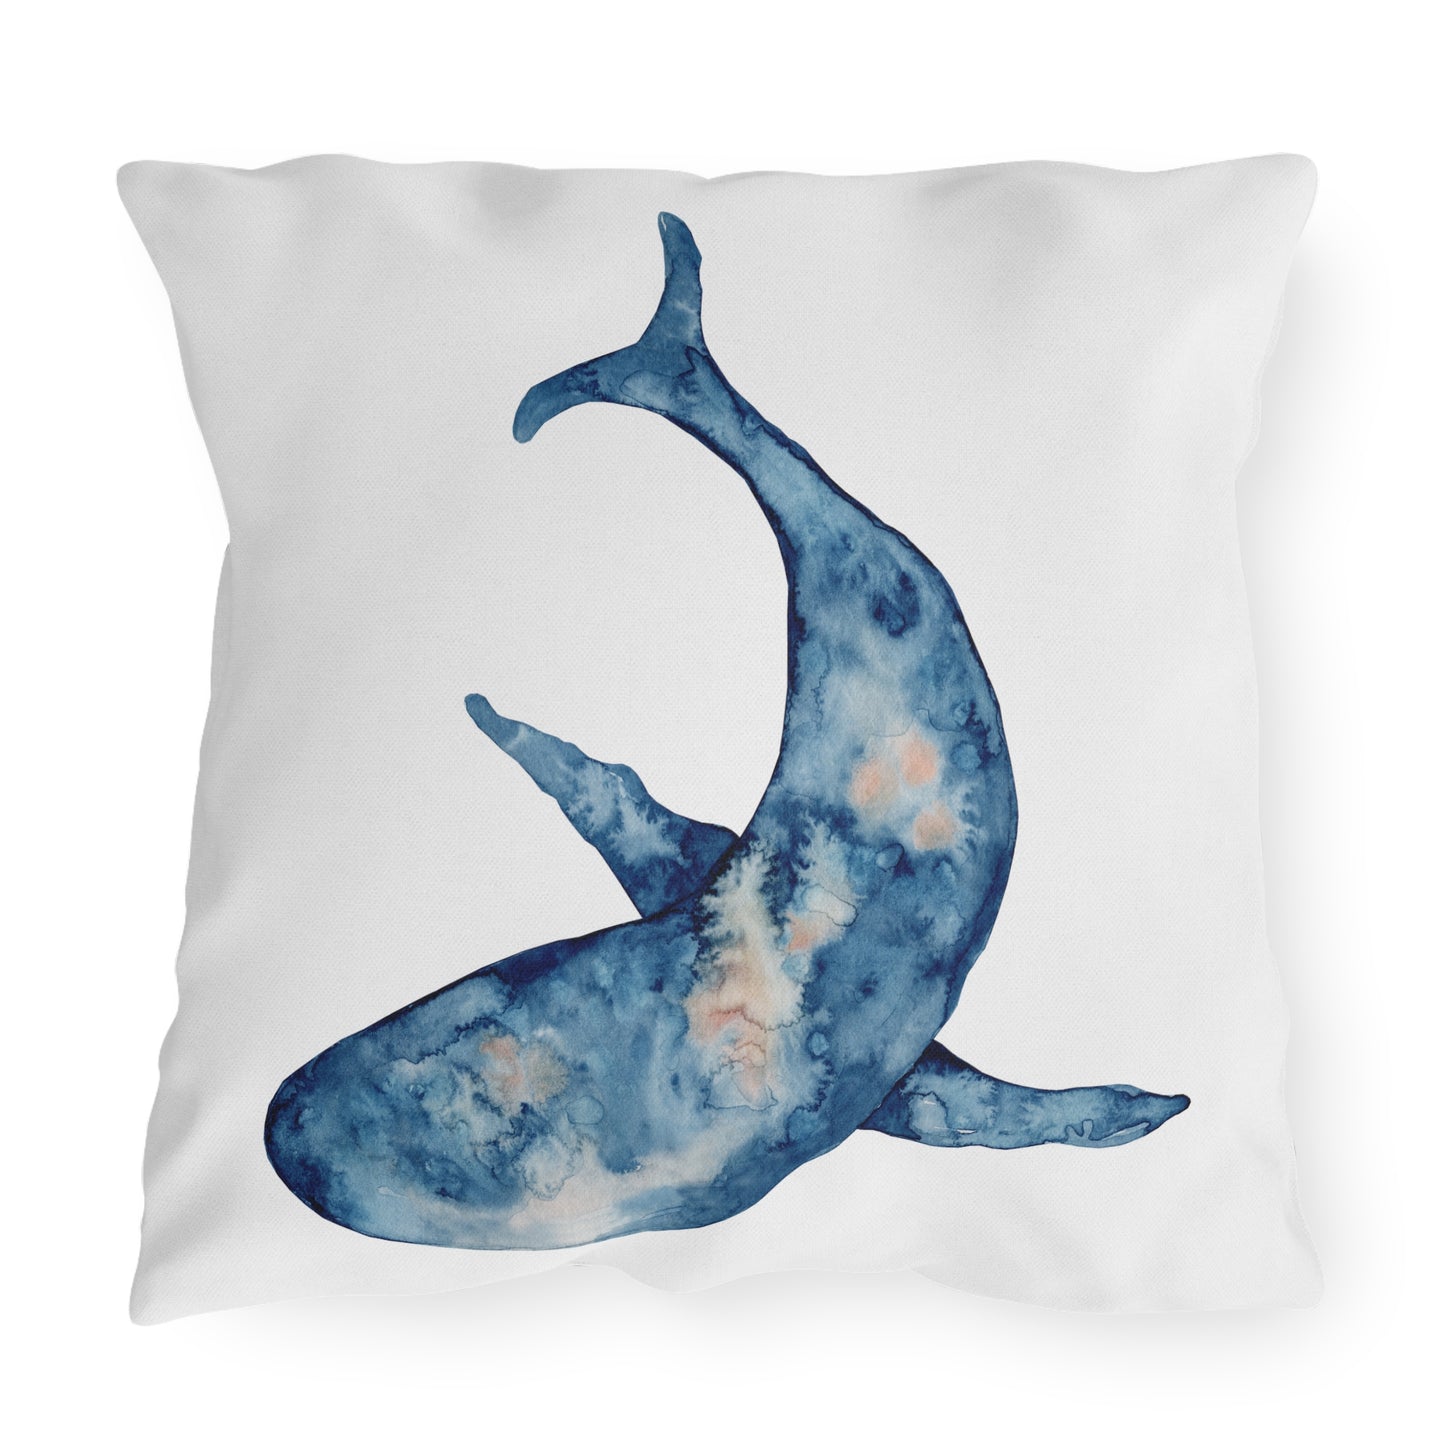 Fish Outdoor Pillow Watercolor Coastal Beach Ocean Lovers Home Gift